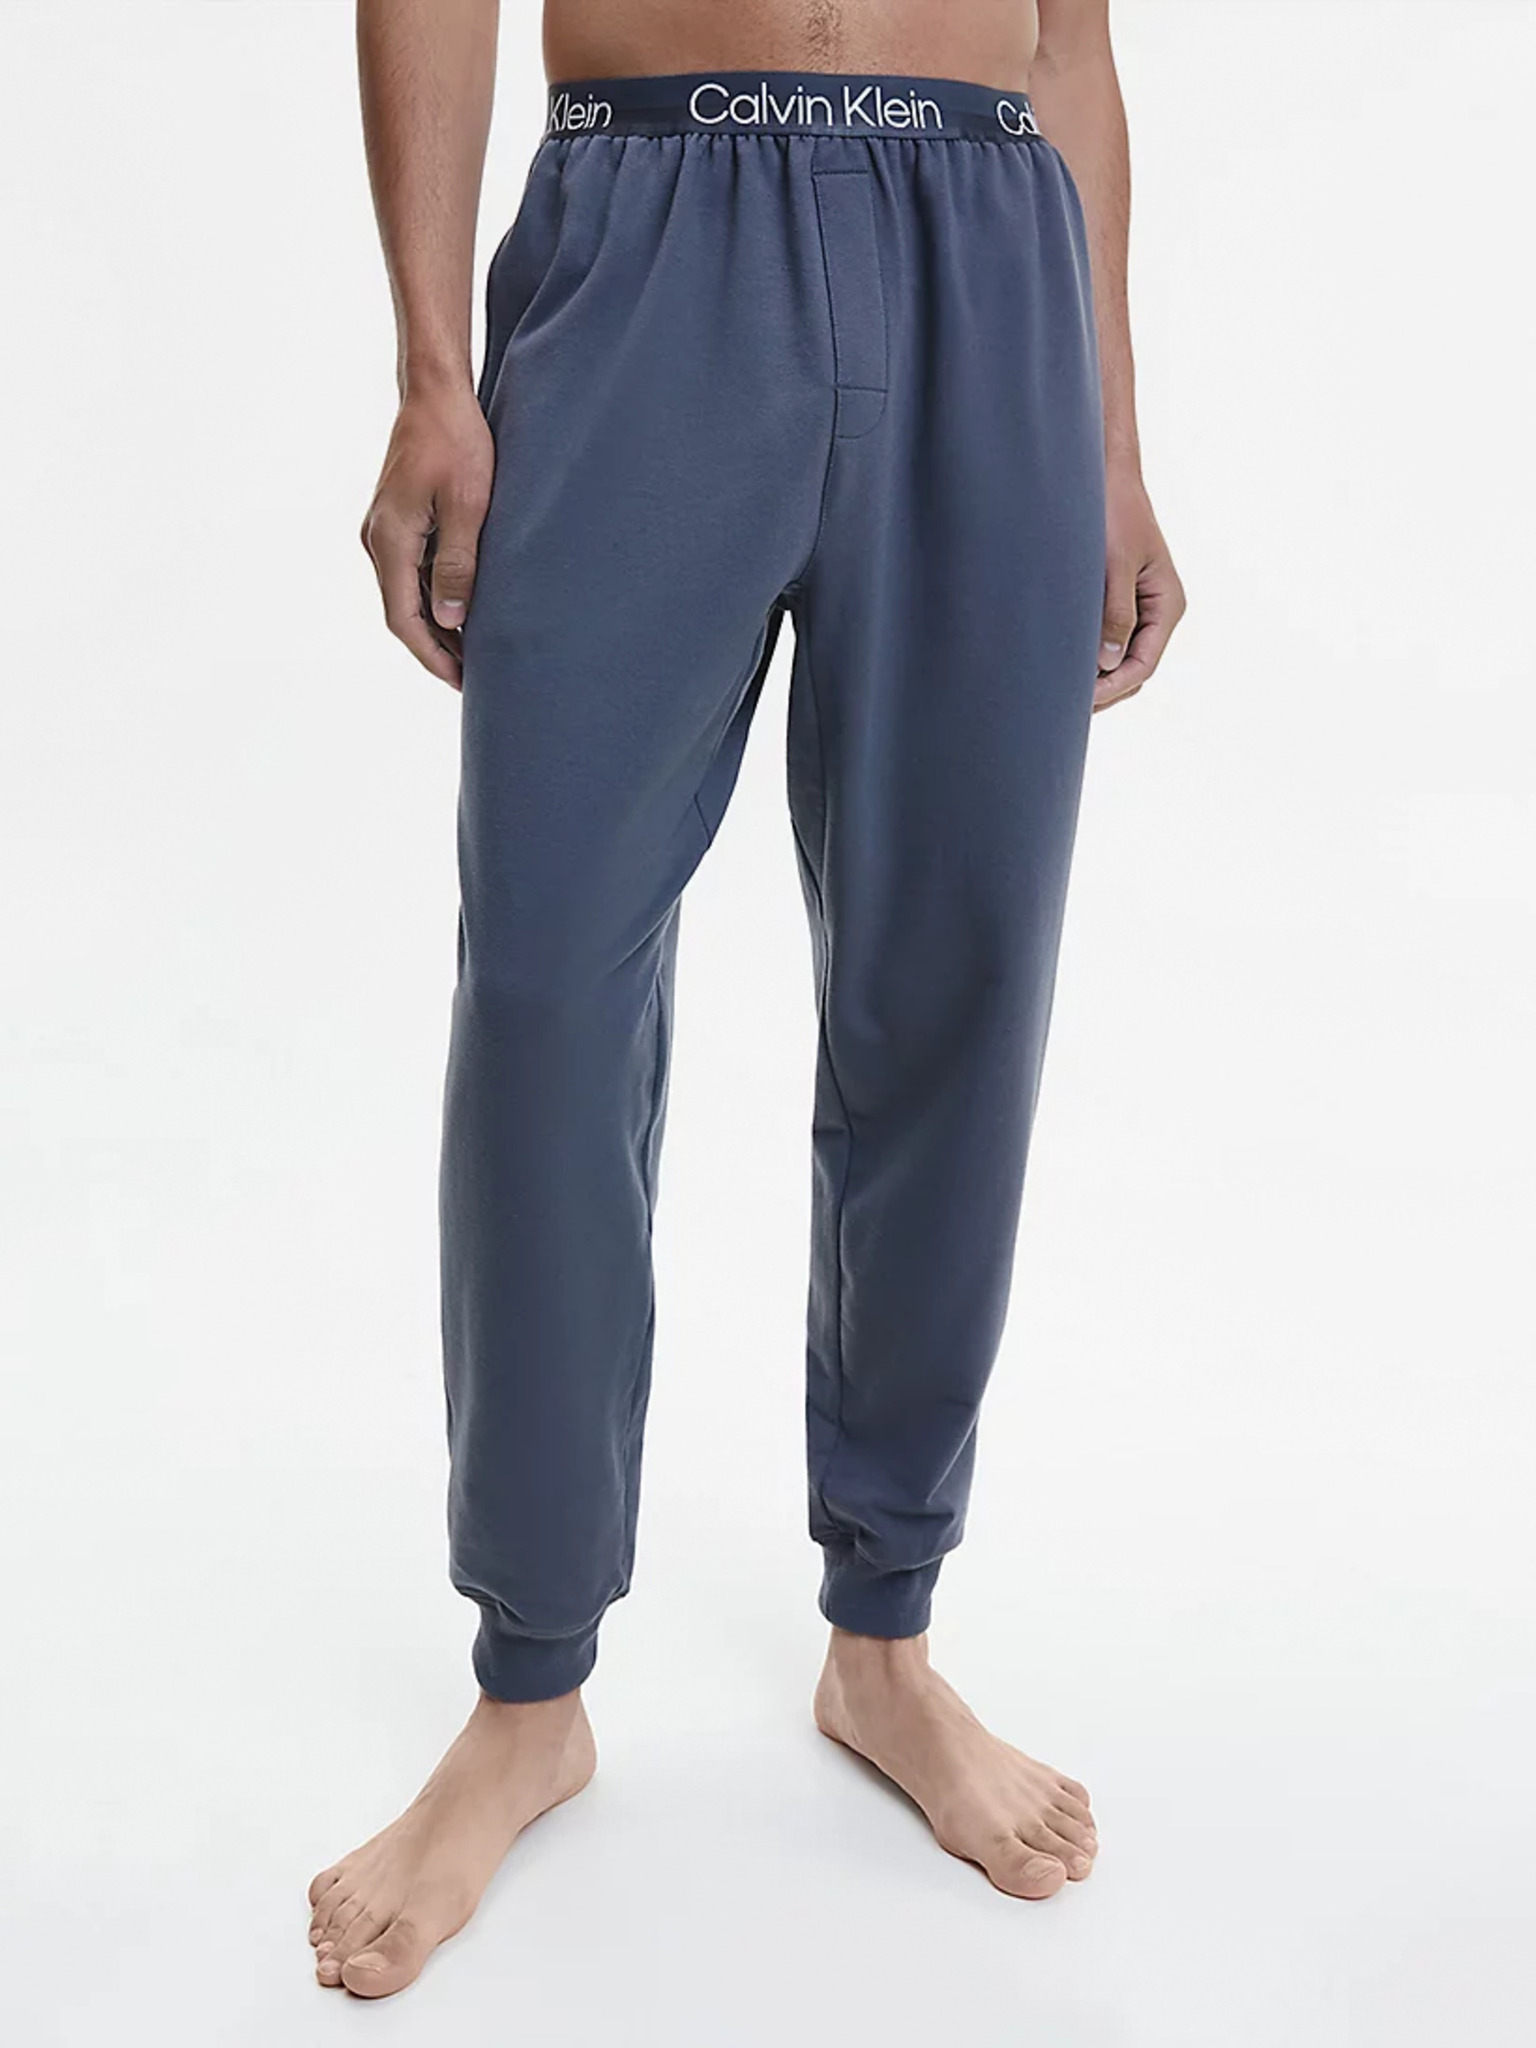 Calvin Klein Underwear - pants Sleeping